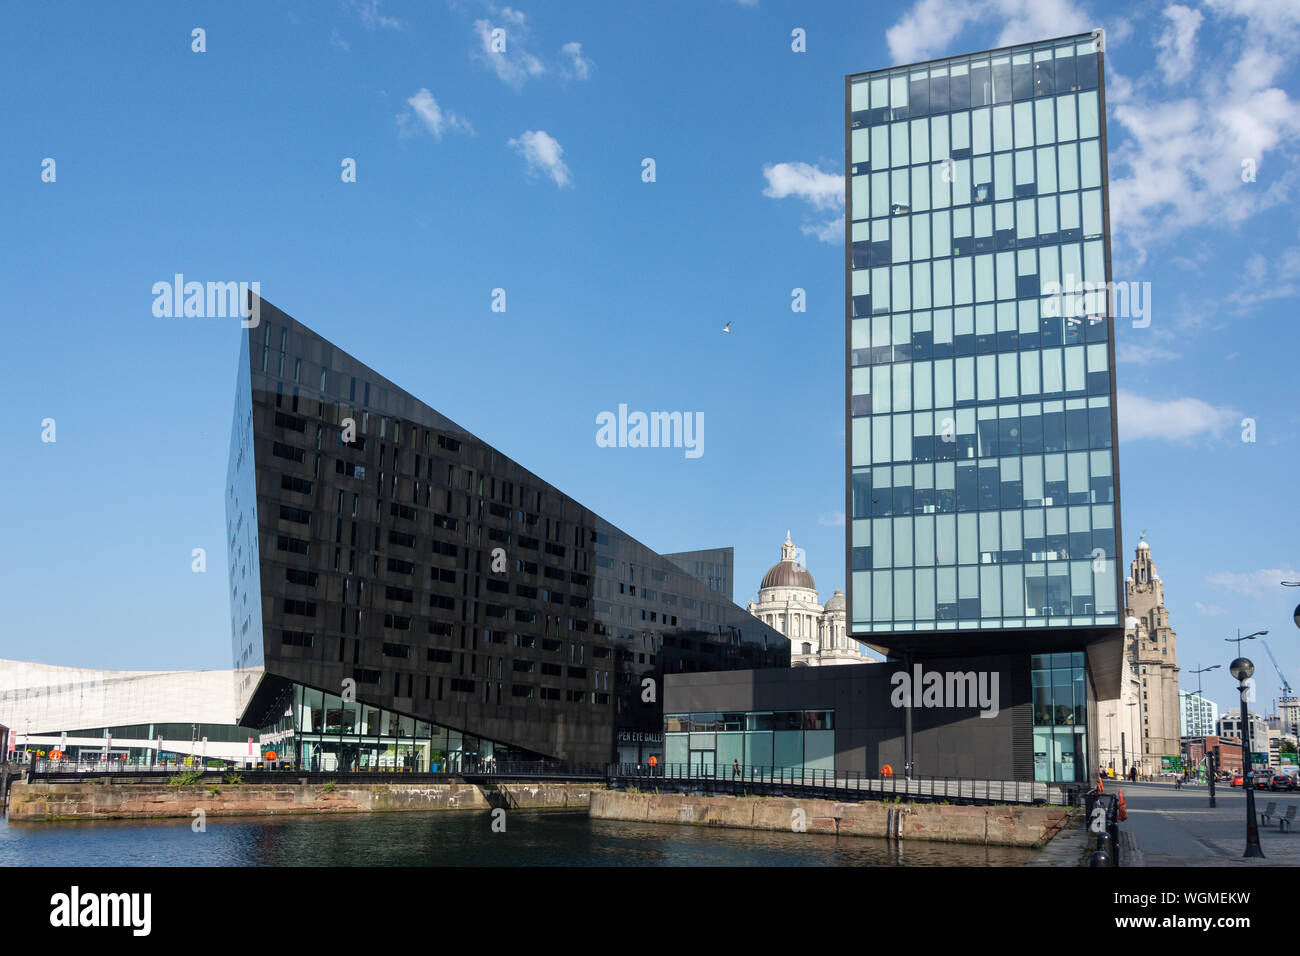 Mann Island Buildings, Canning Dock, Liverpool Waterfront, Liverpool, Merseyside, England, United Kingdom Stock Photo